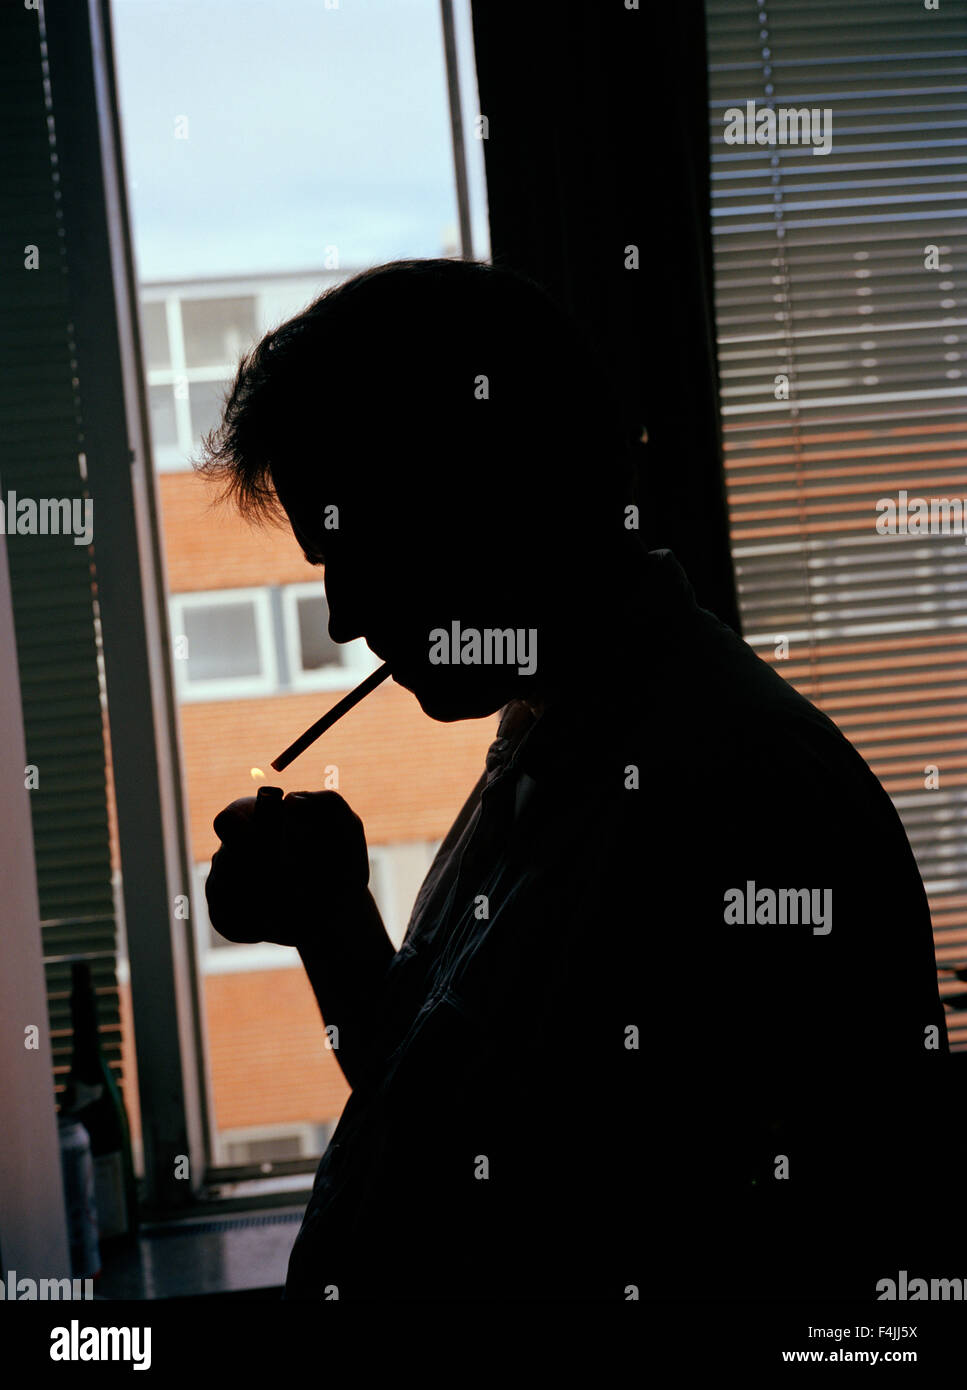 Man lighting cigarette Stock Photo